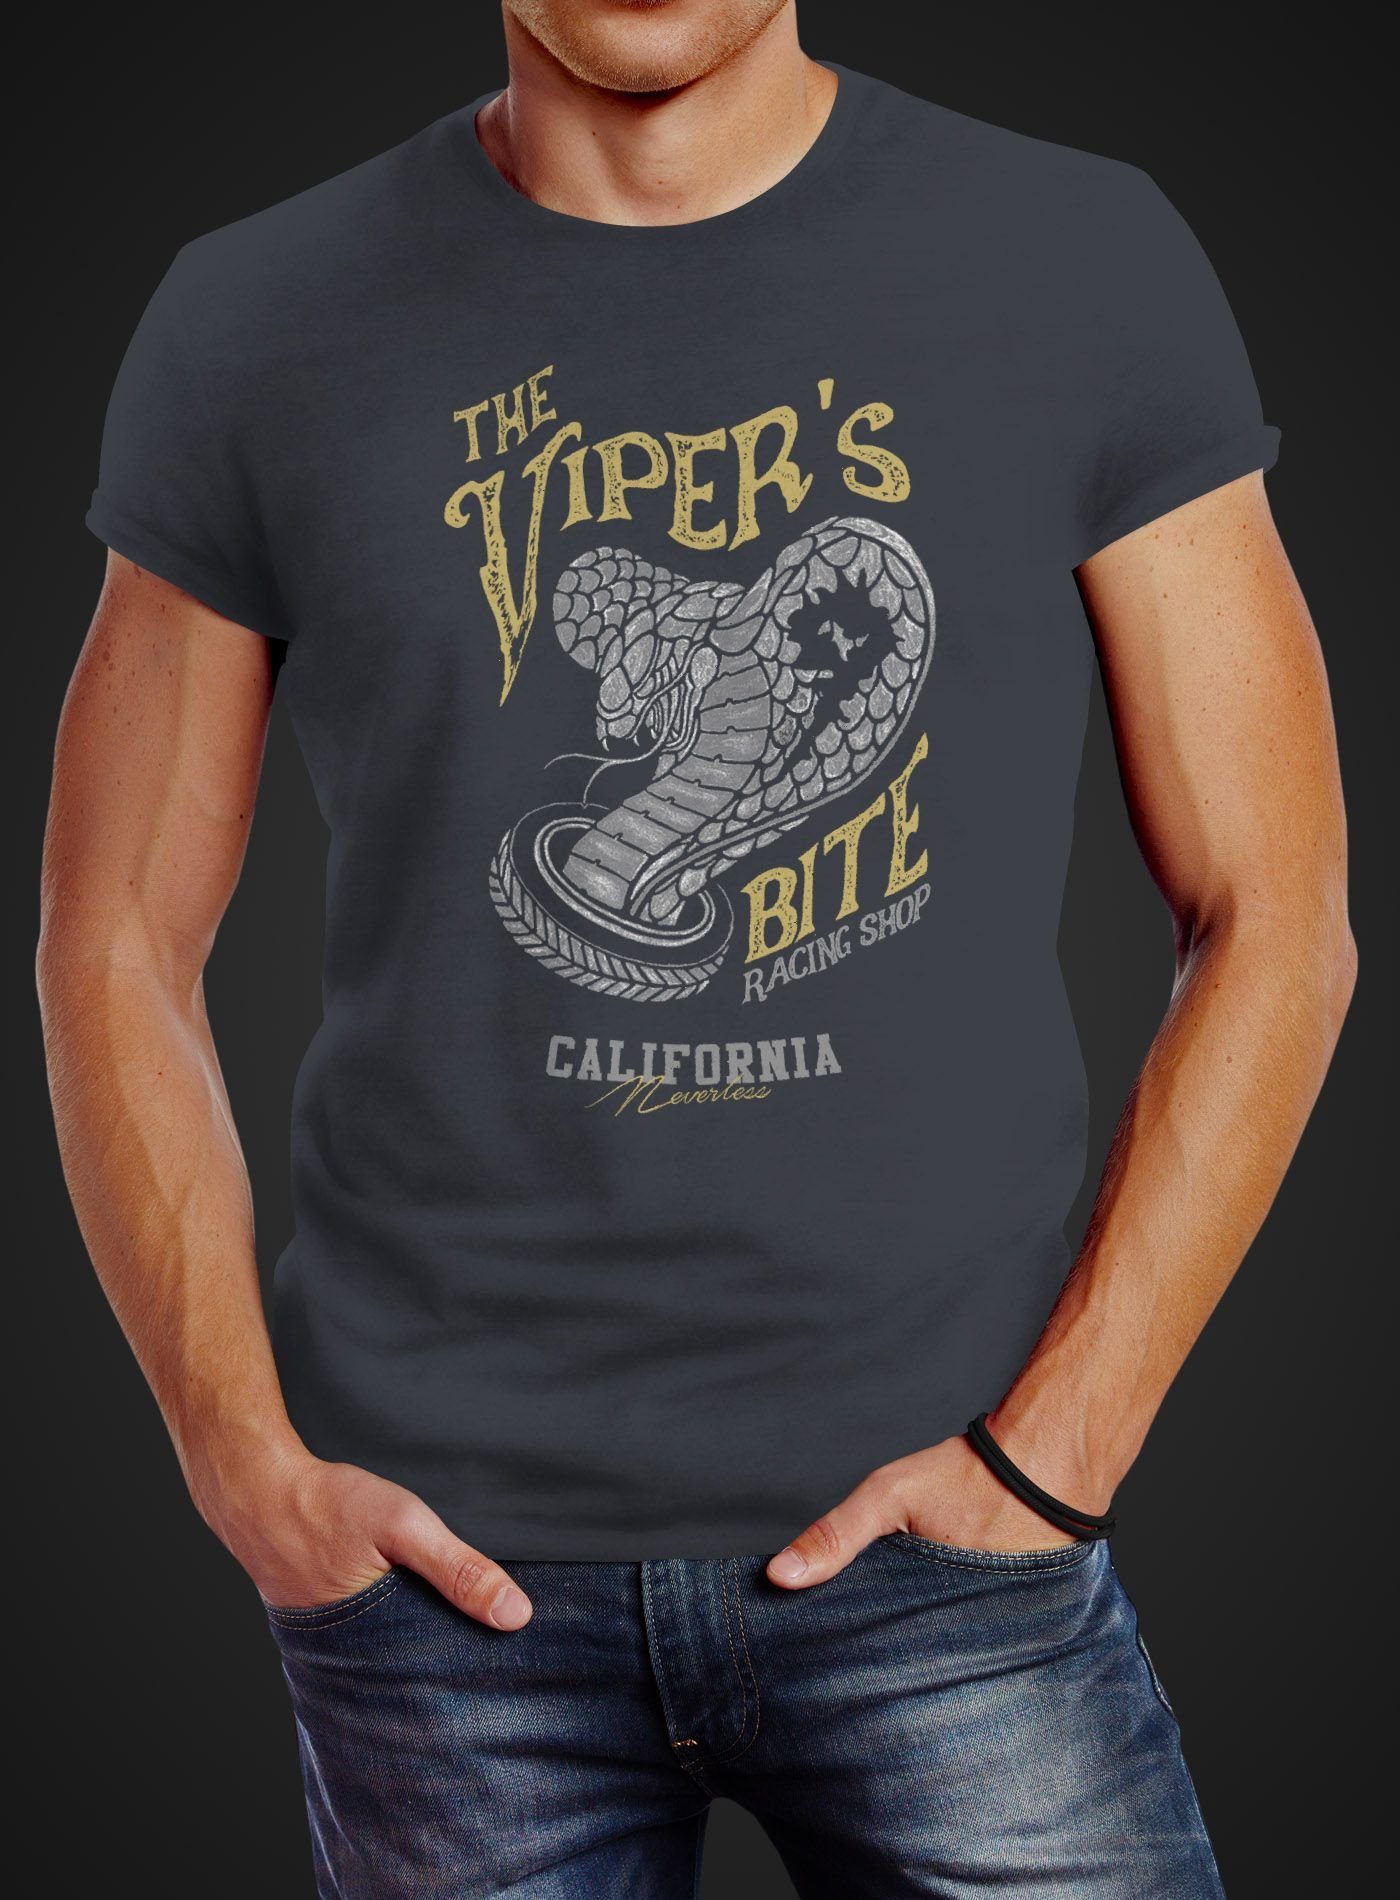 California Print mit T-Shirt Vipers Bite Neverless Racing Style Tatto grau Print-Shirt Neverless® Fit Klapperschlange Shop Slim The Herren